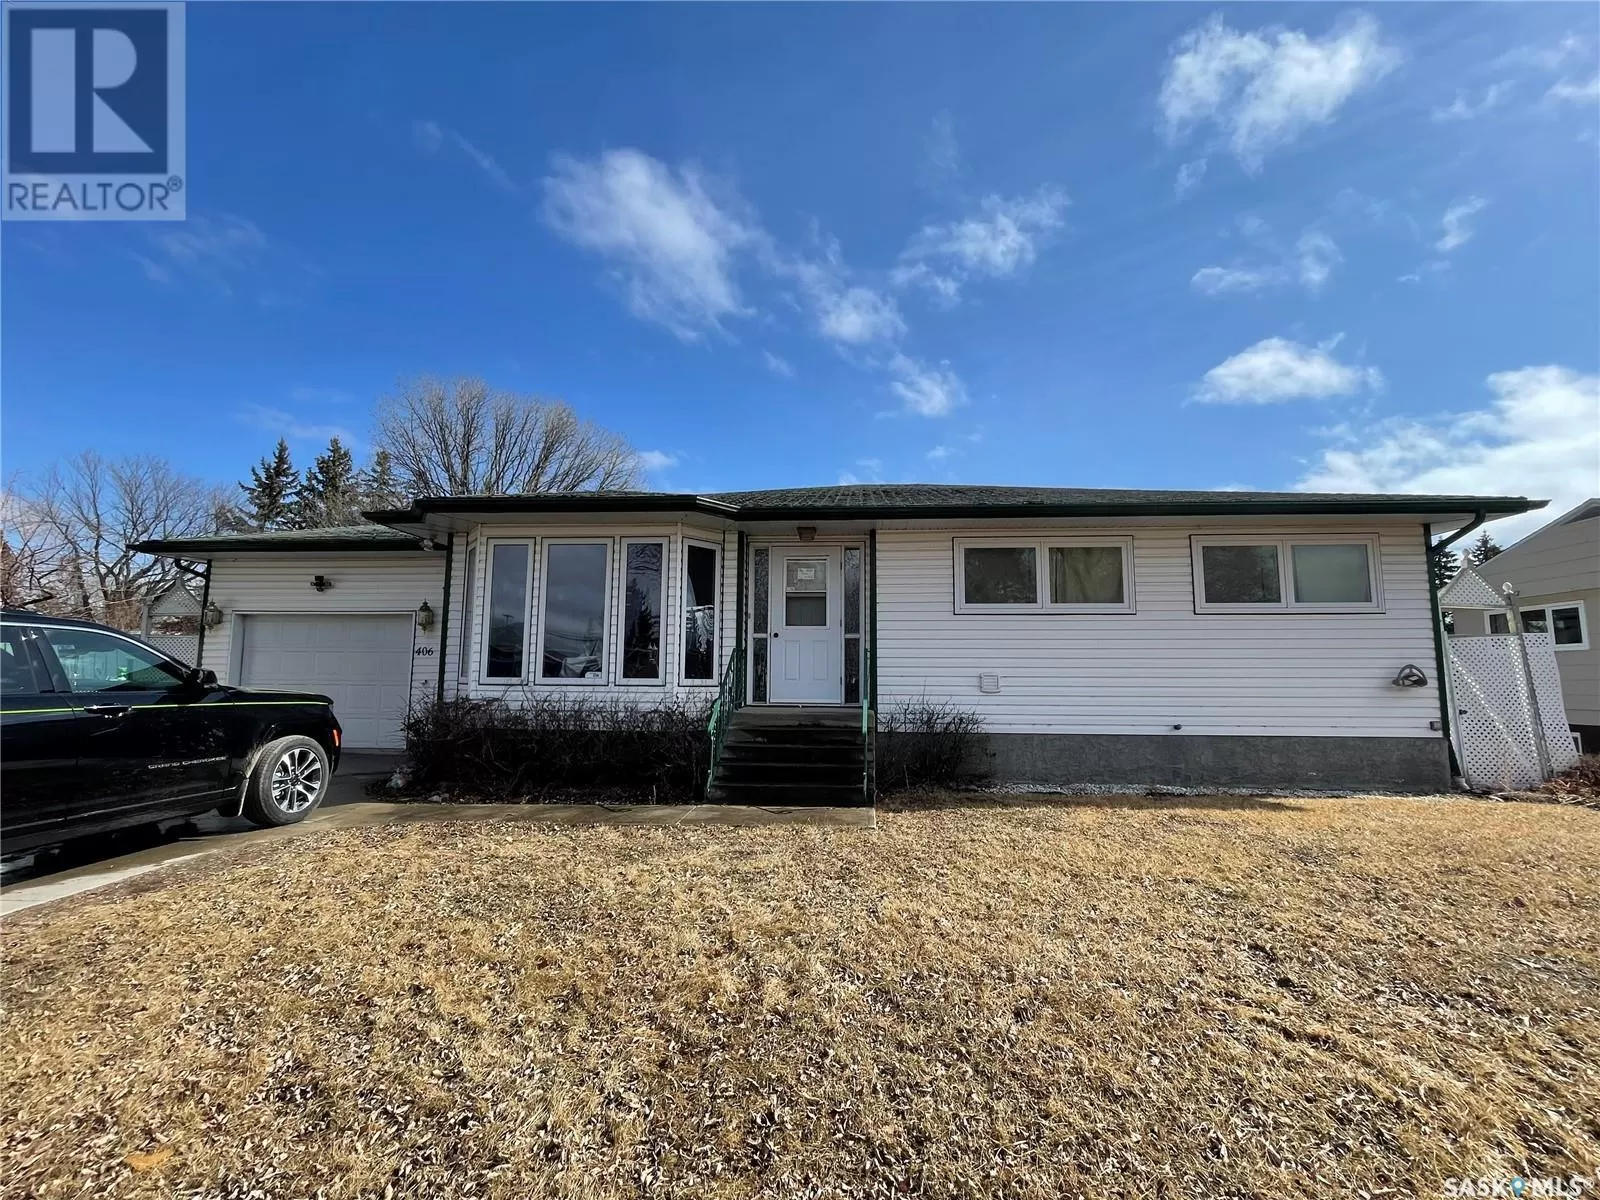 House for rent: 406 1st Street E, Meadow Lake, Saskatchewan S9X 1E8